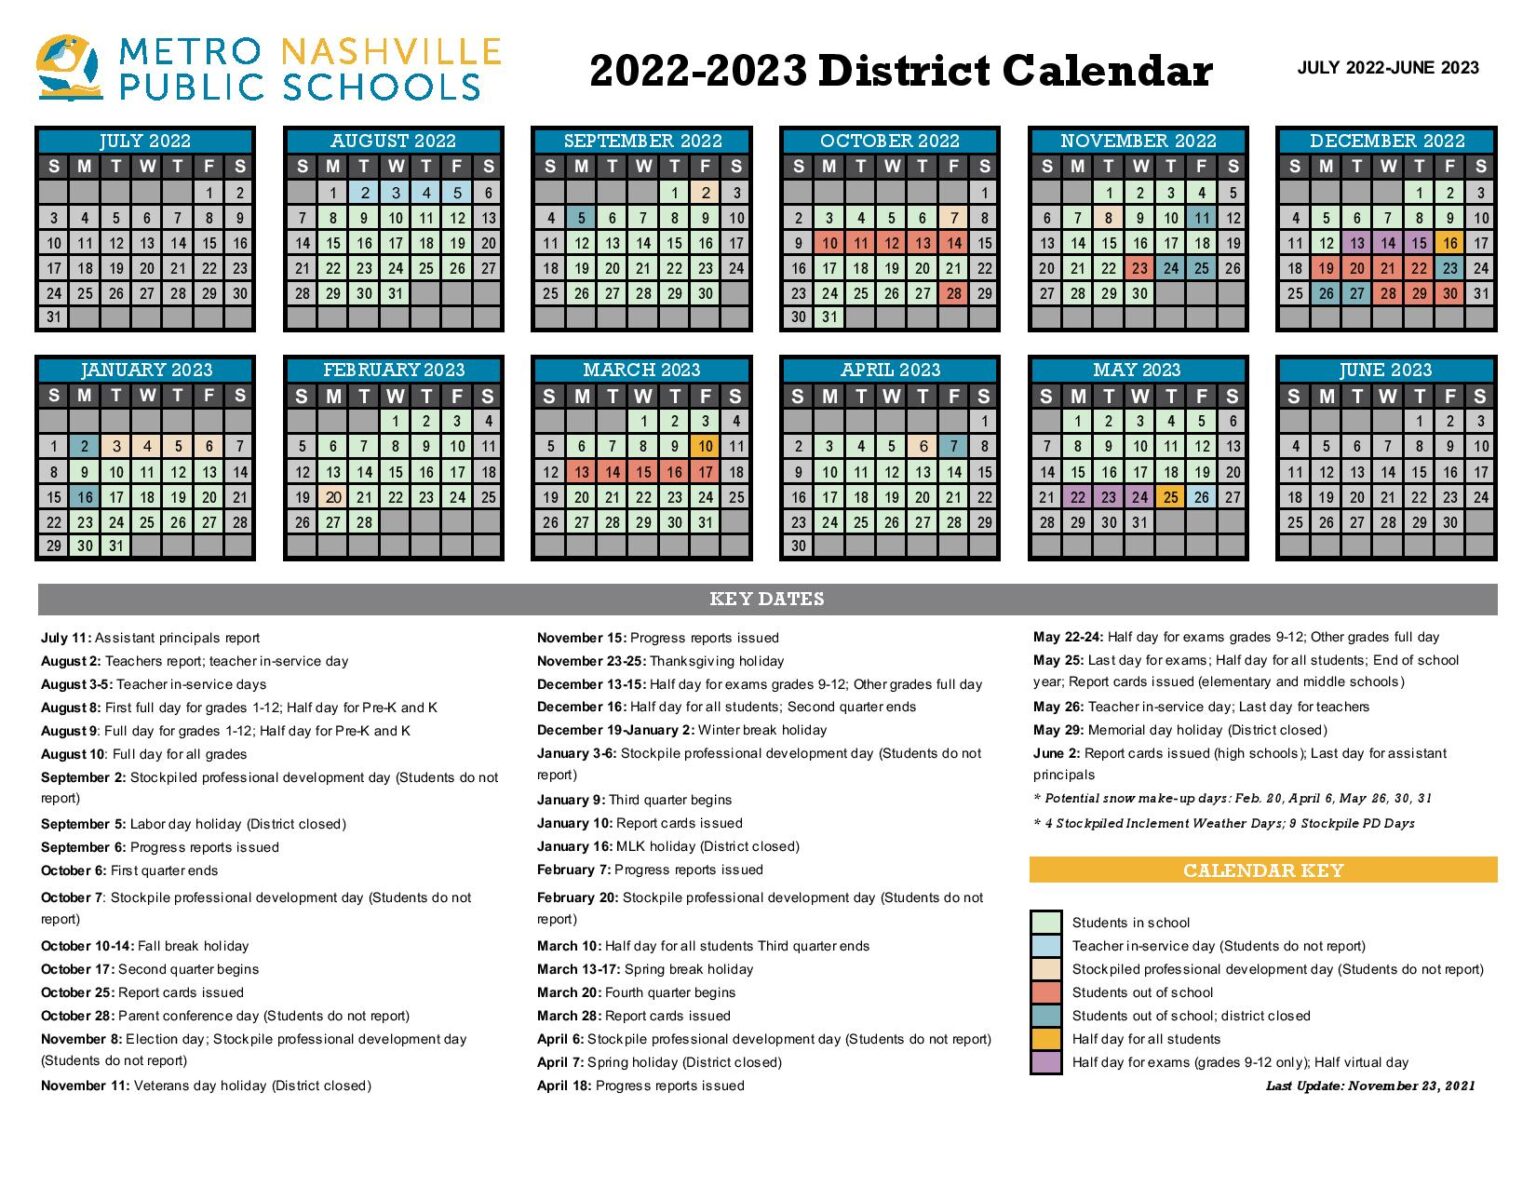 Metro Nashville Public Schools Calendar 2022 2023